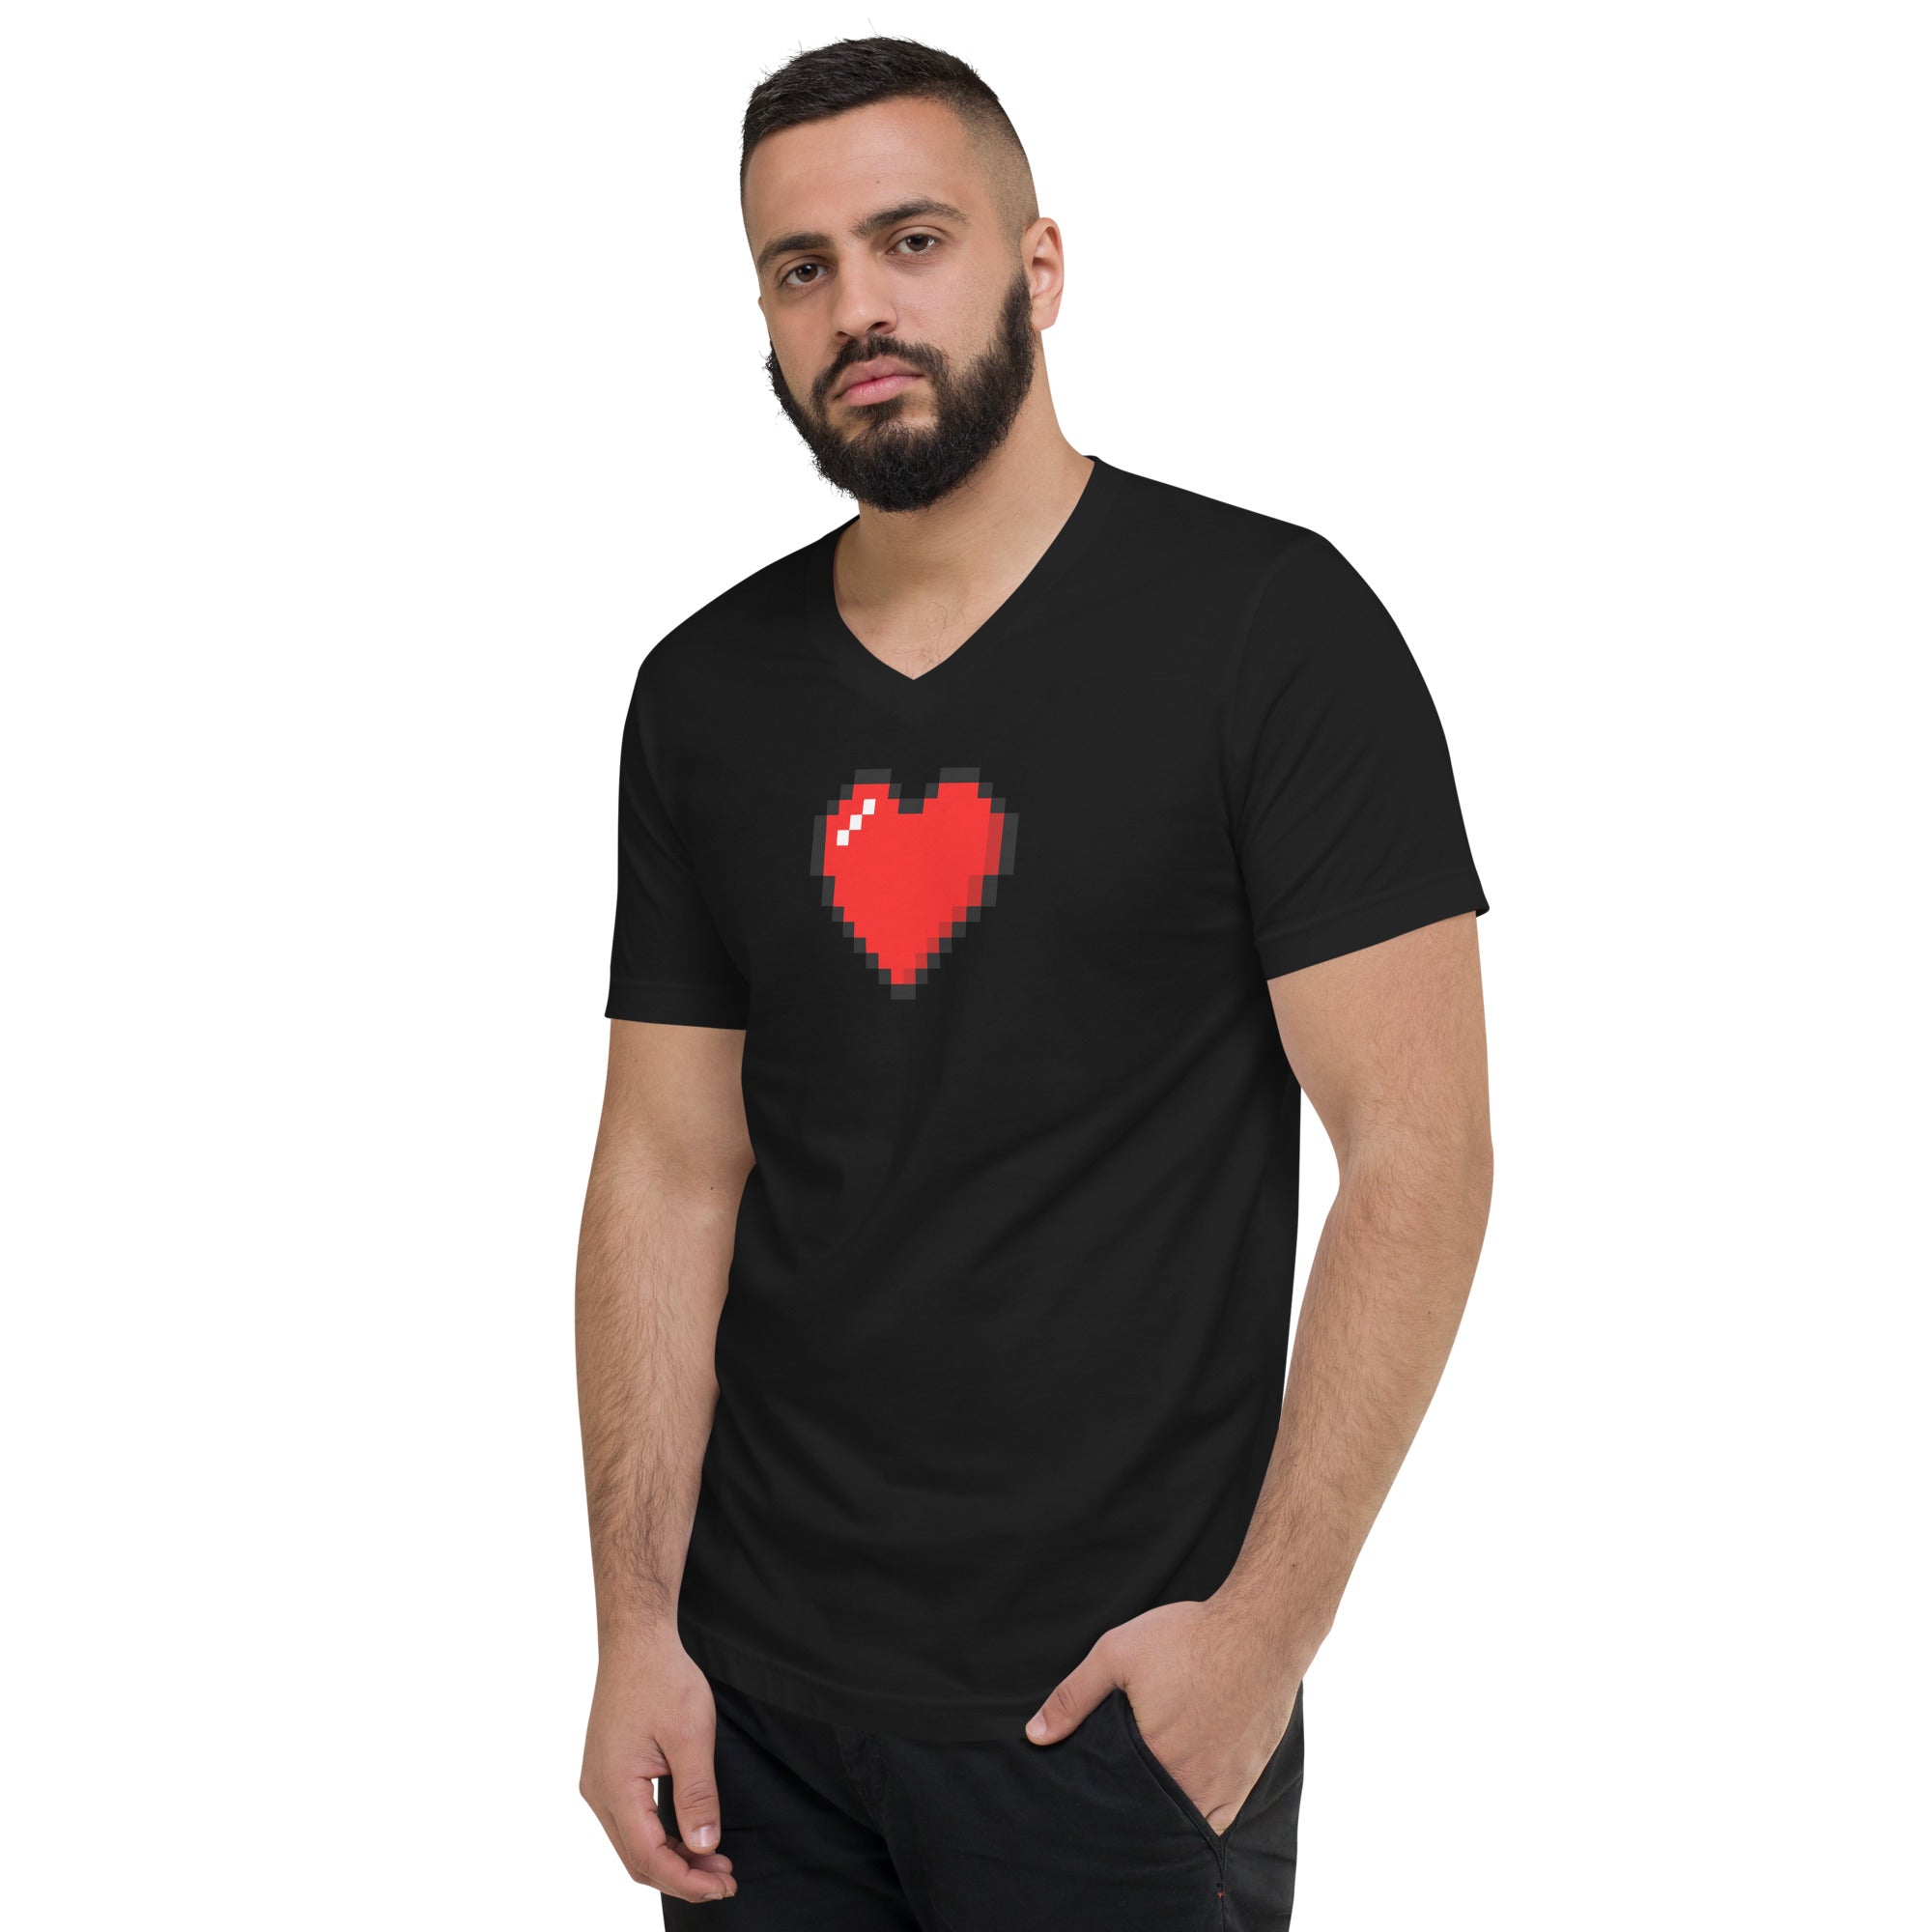 Retro 8 Bit Video Game Pixelated Heart Short Sleeve V-Neck T-Shirt